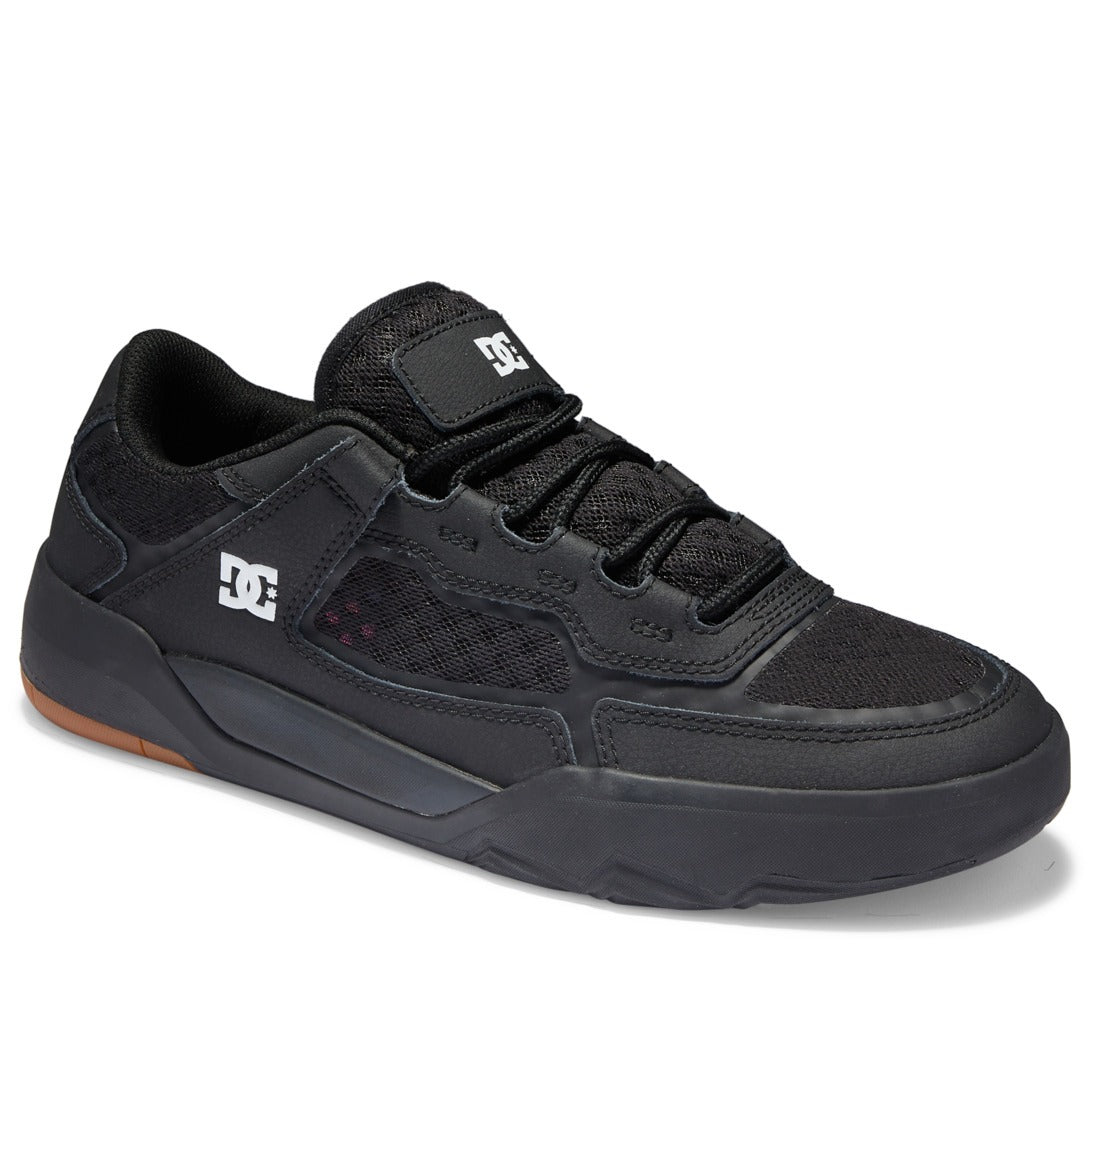 DC SHOES - Metric (Black/Gum) Skate Shoes